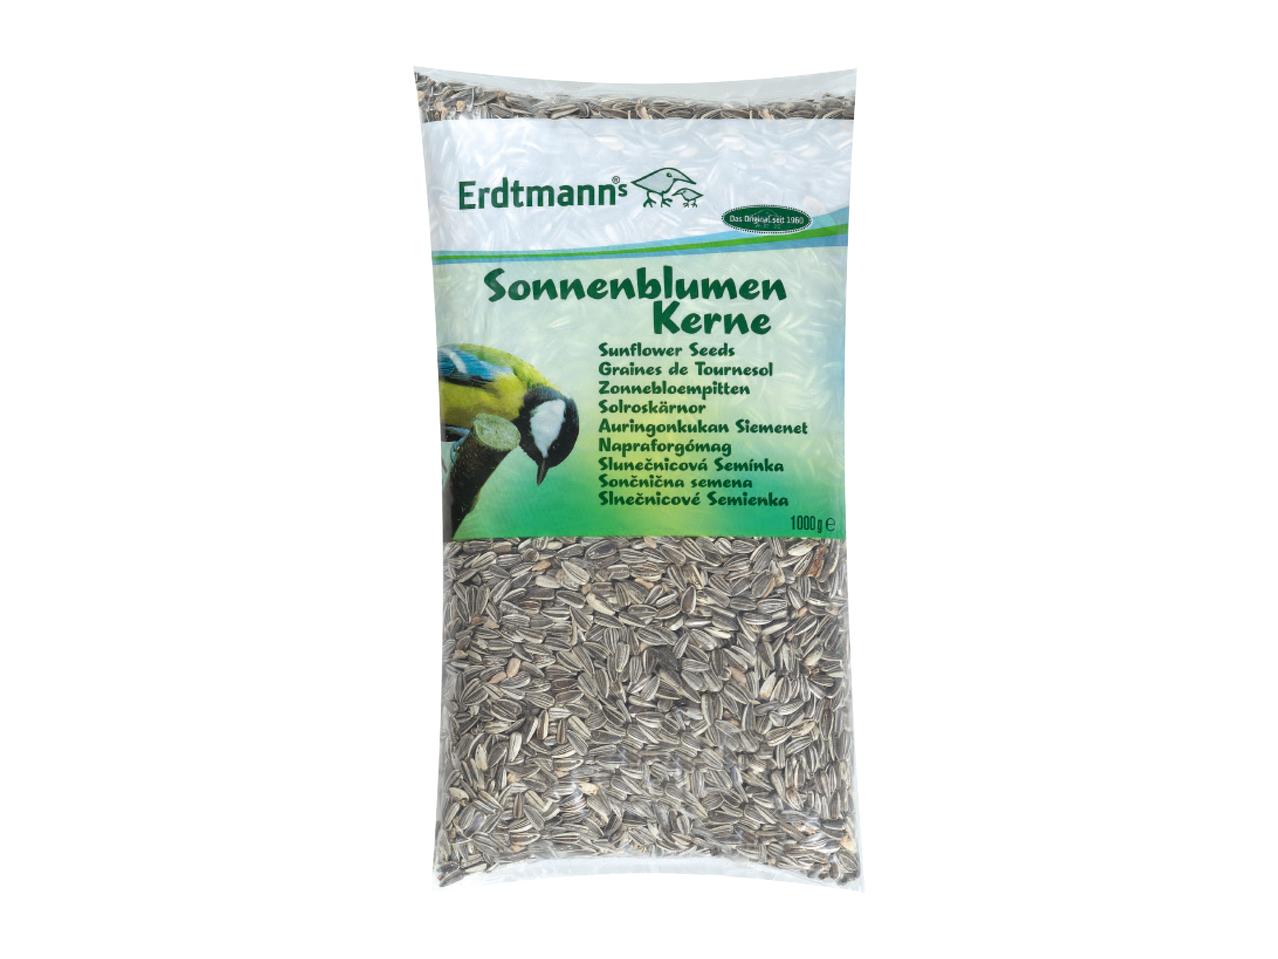 ERDTMANN(R) Sunflower Seeds (Sonnenblumen Kerne)